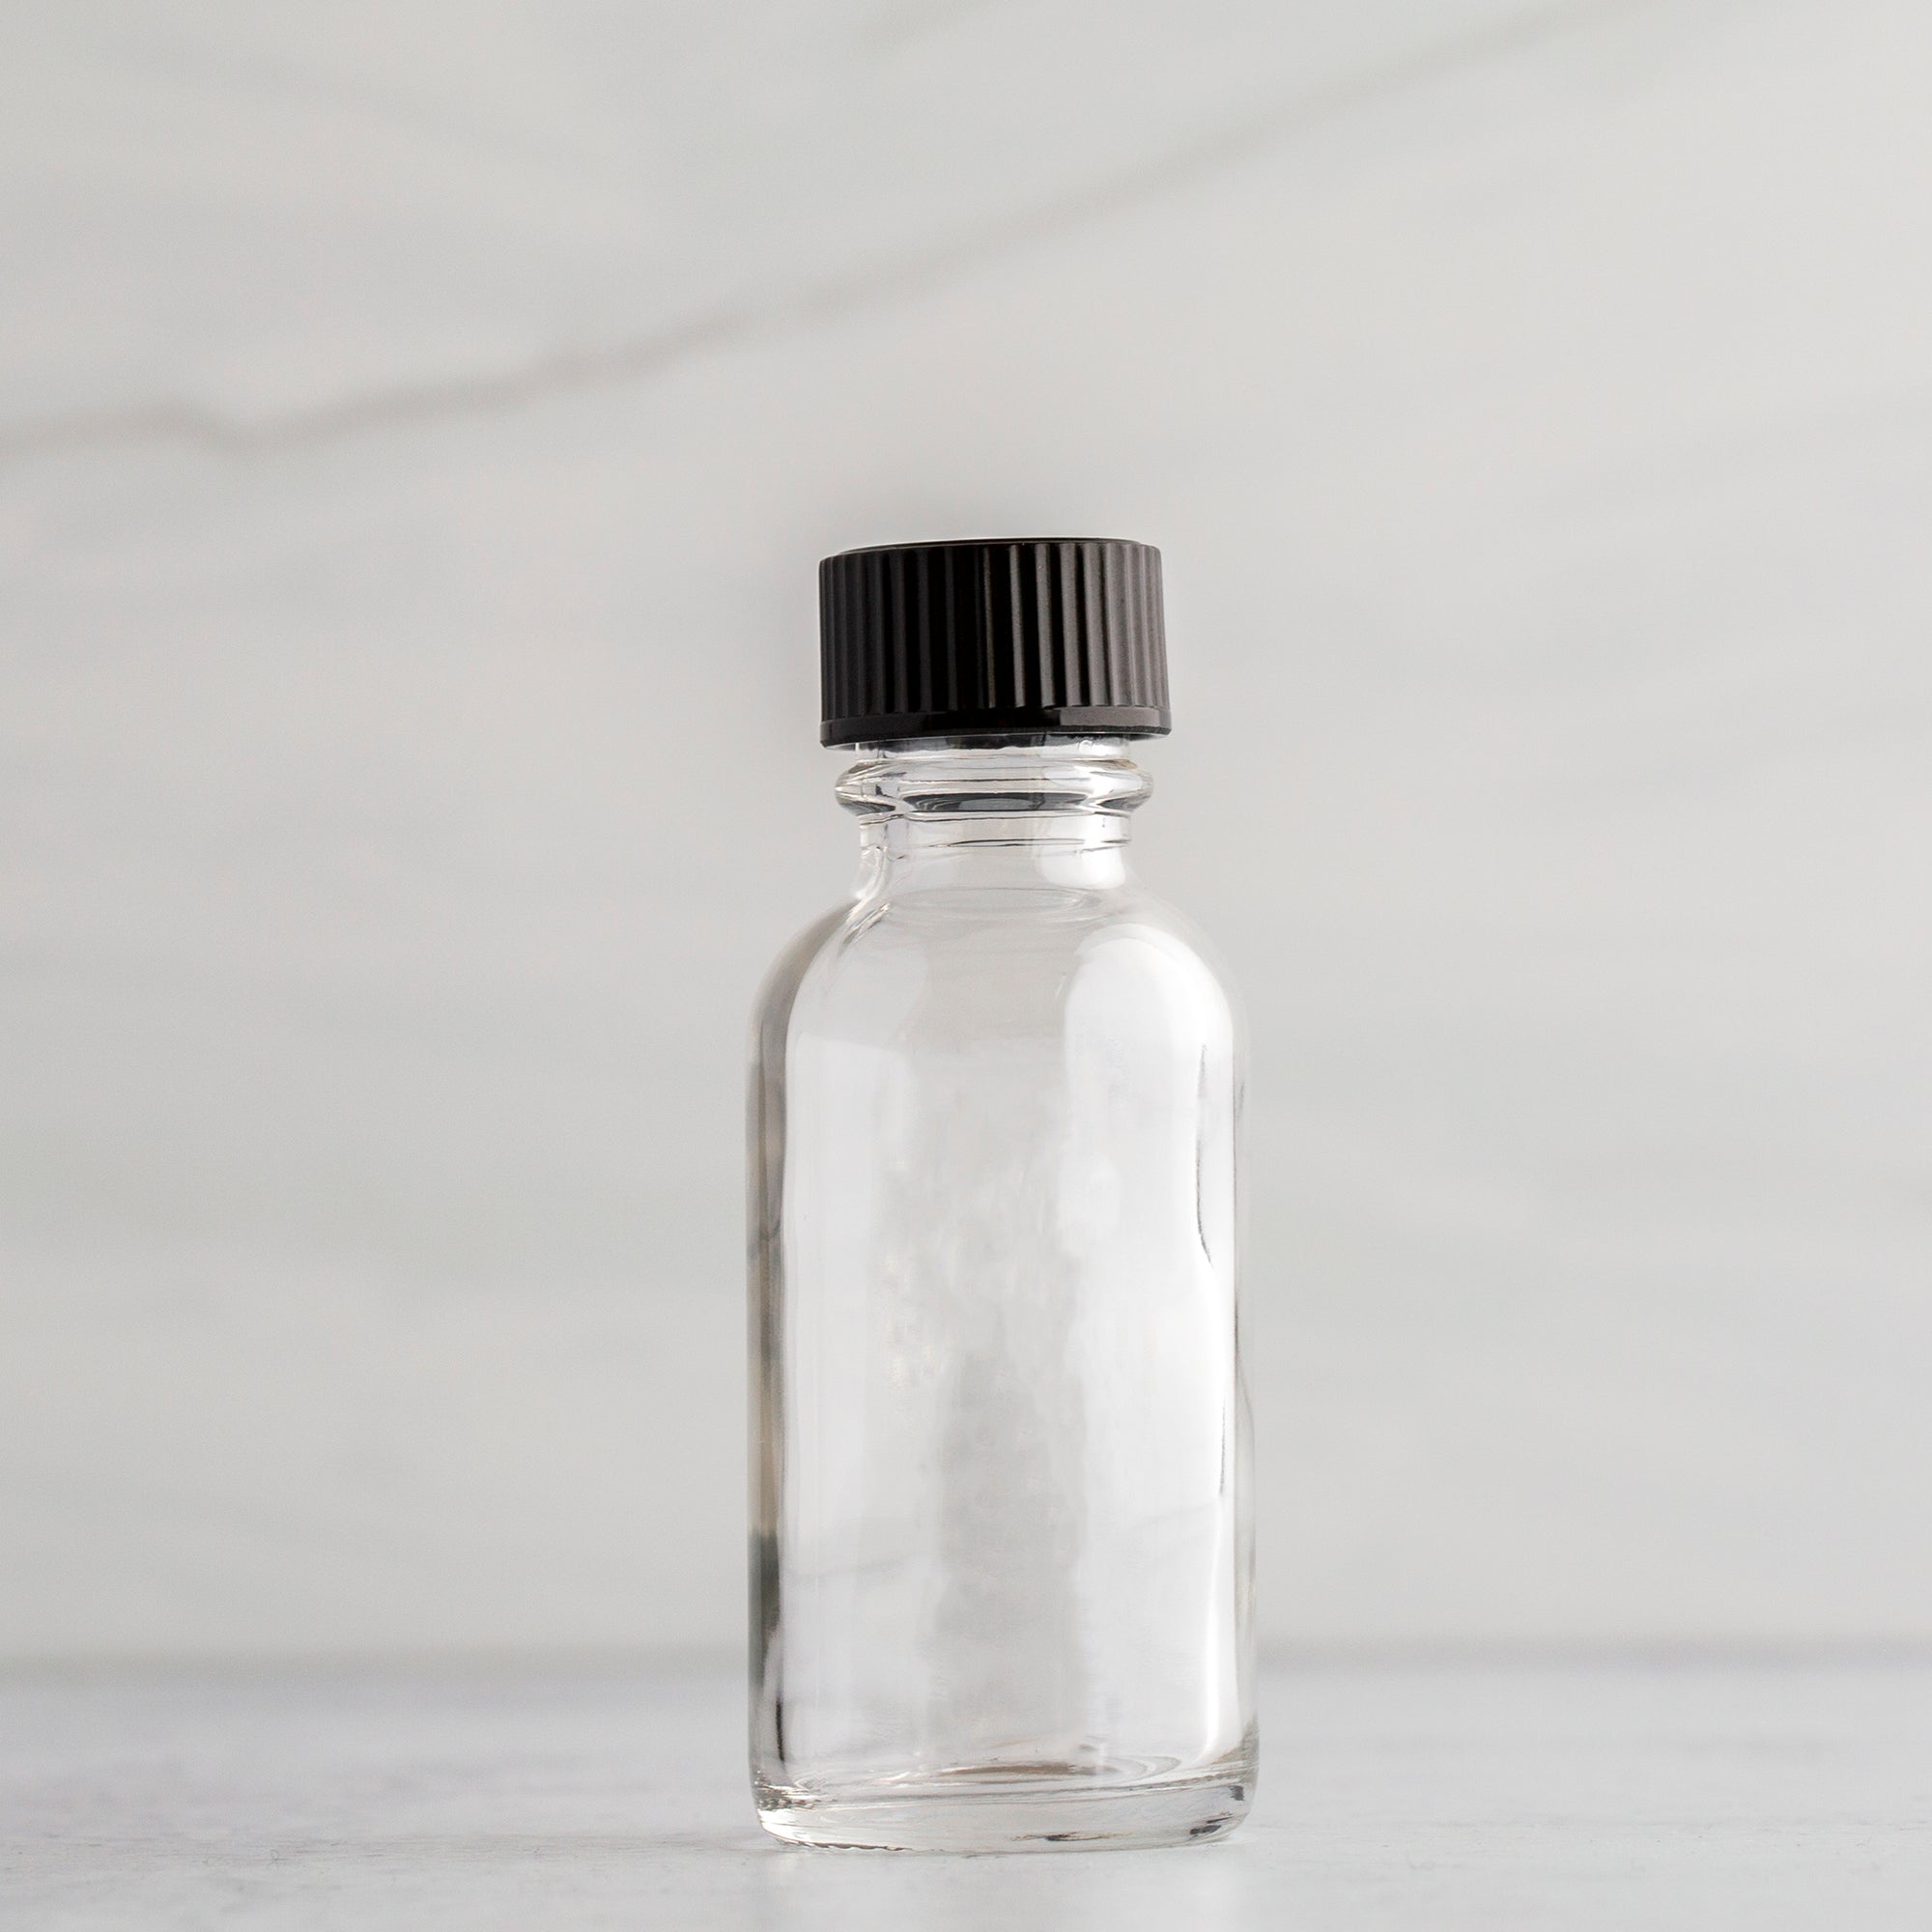 1 oz Clear Glass Bottle with Black Phenolic Cap